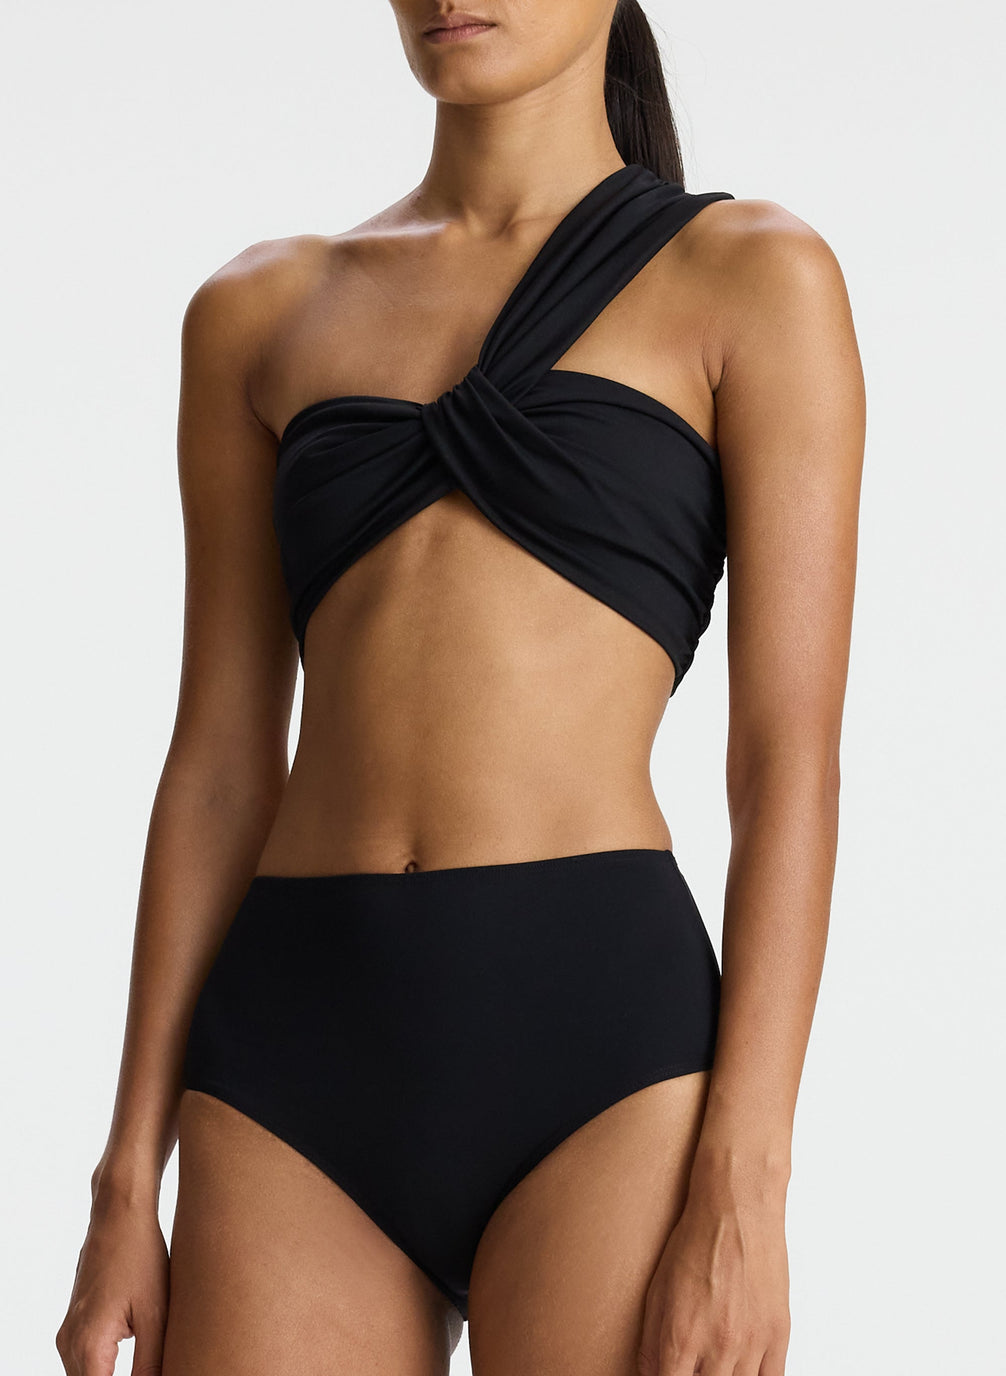 detail view of woman wearing black one shoulder swim top and black bikini bottom